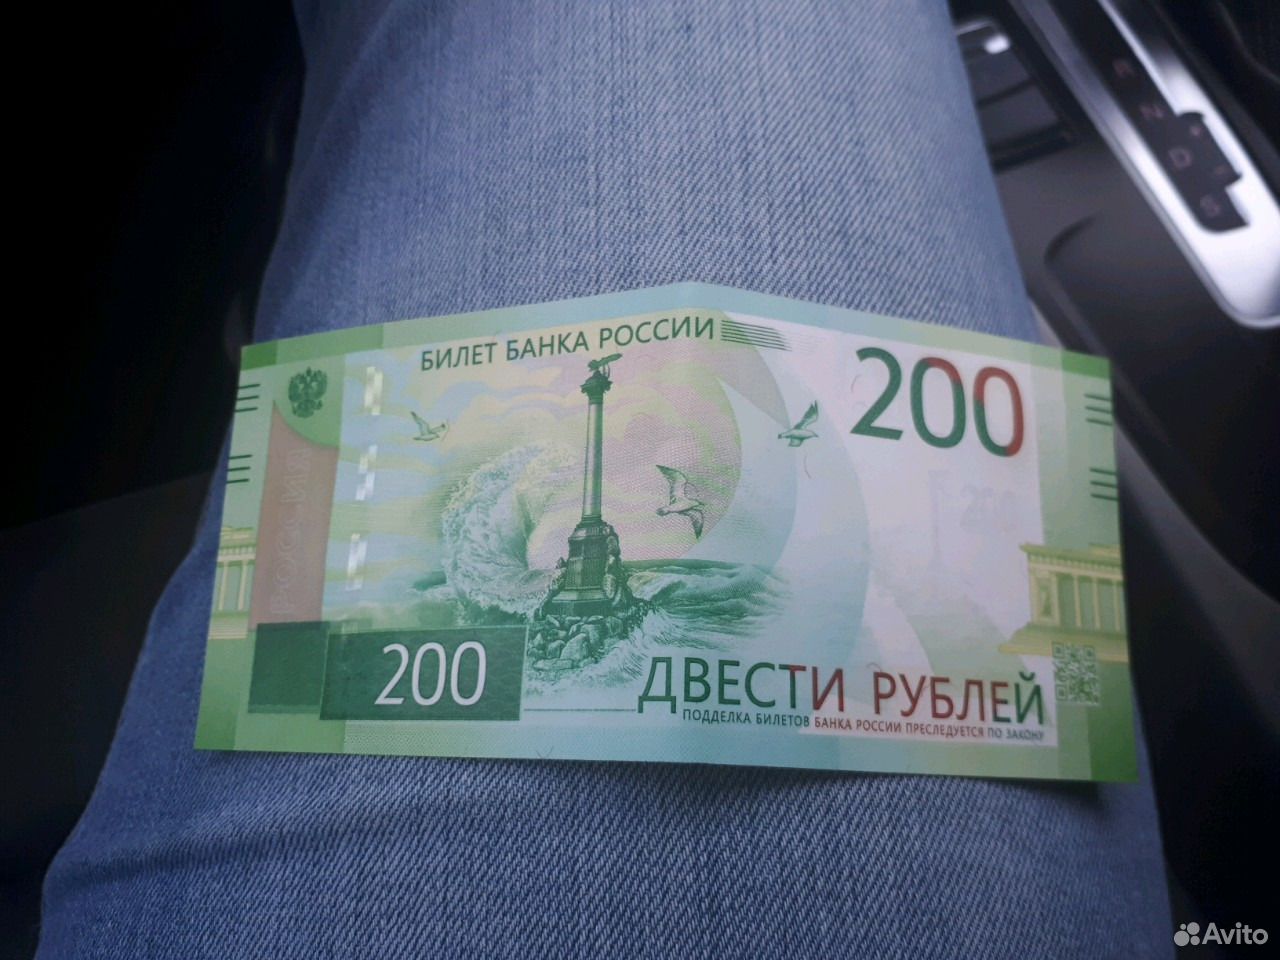 Код 200 рублей. 200 Рублей. Банкнота 200. Купюра 200 рублей. 200 Рублей банкнота.